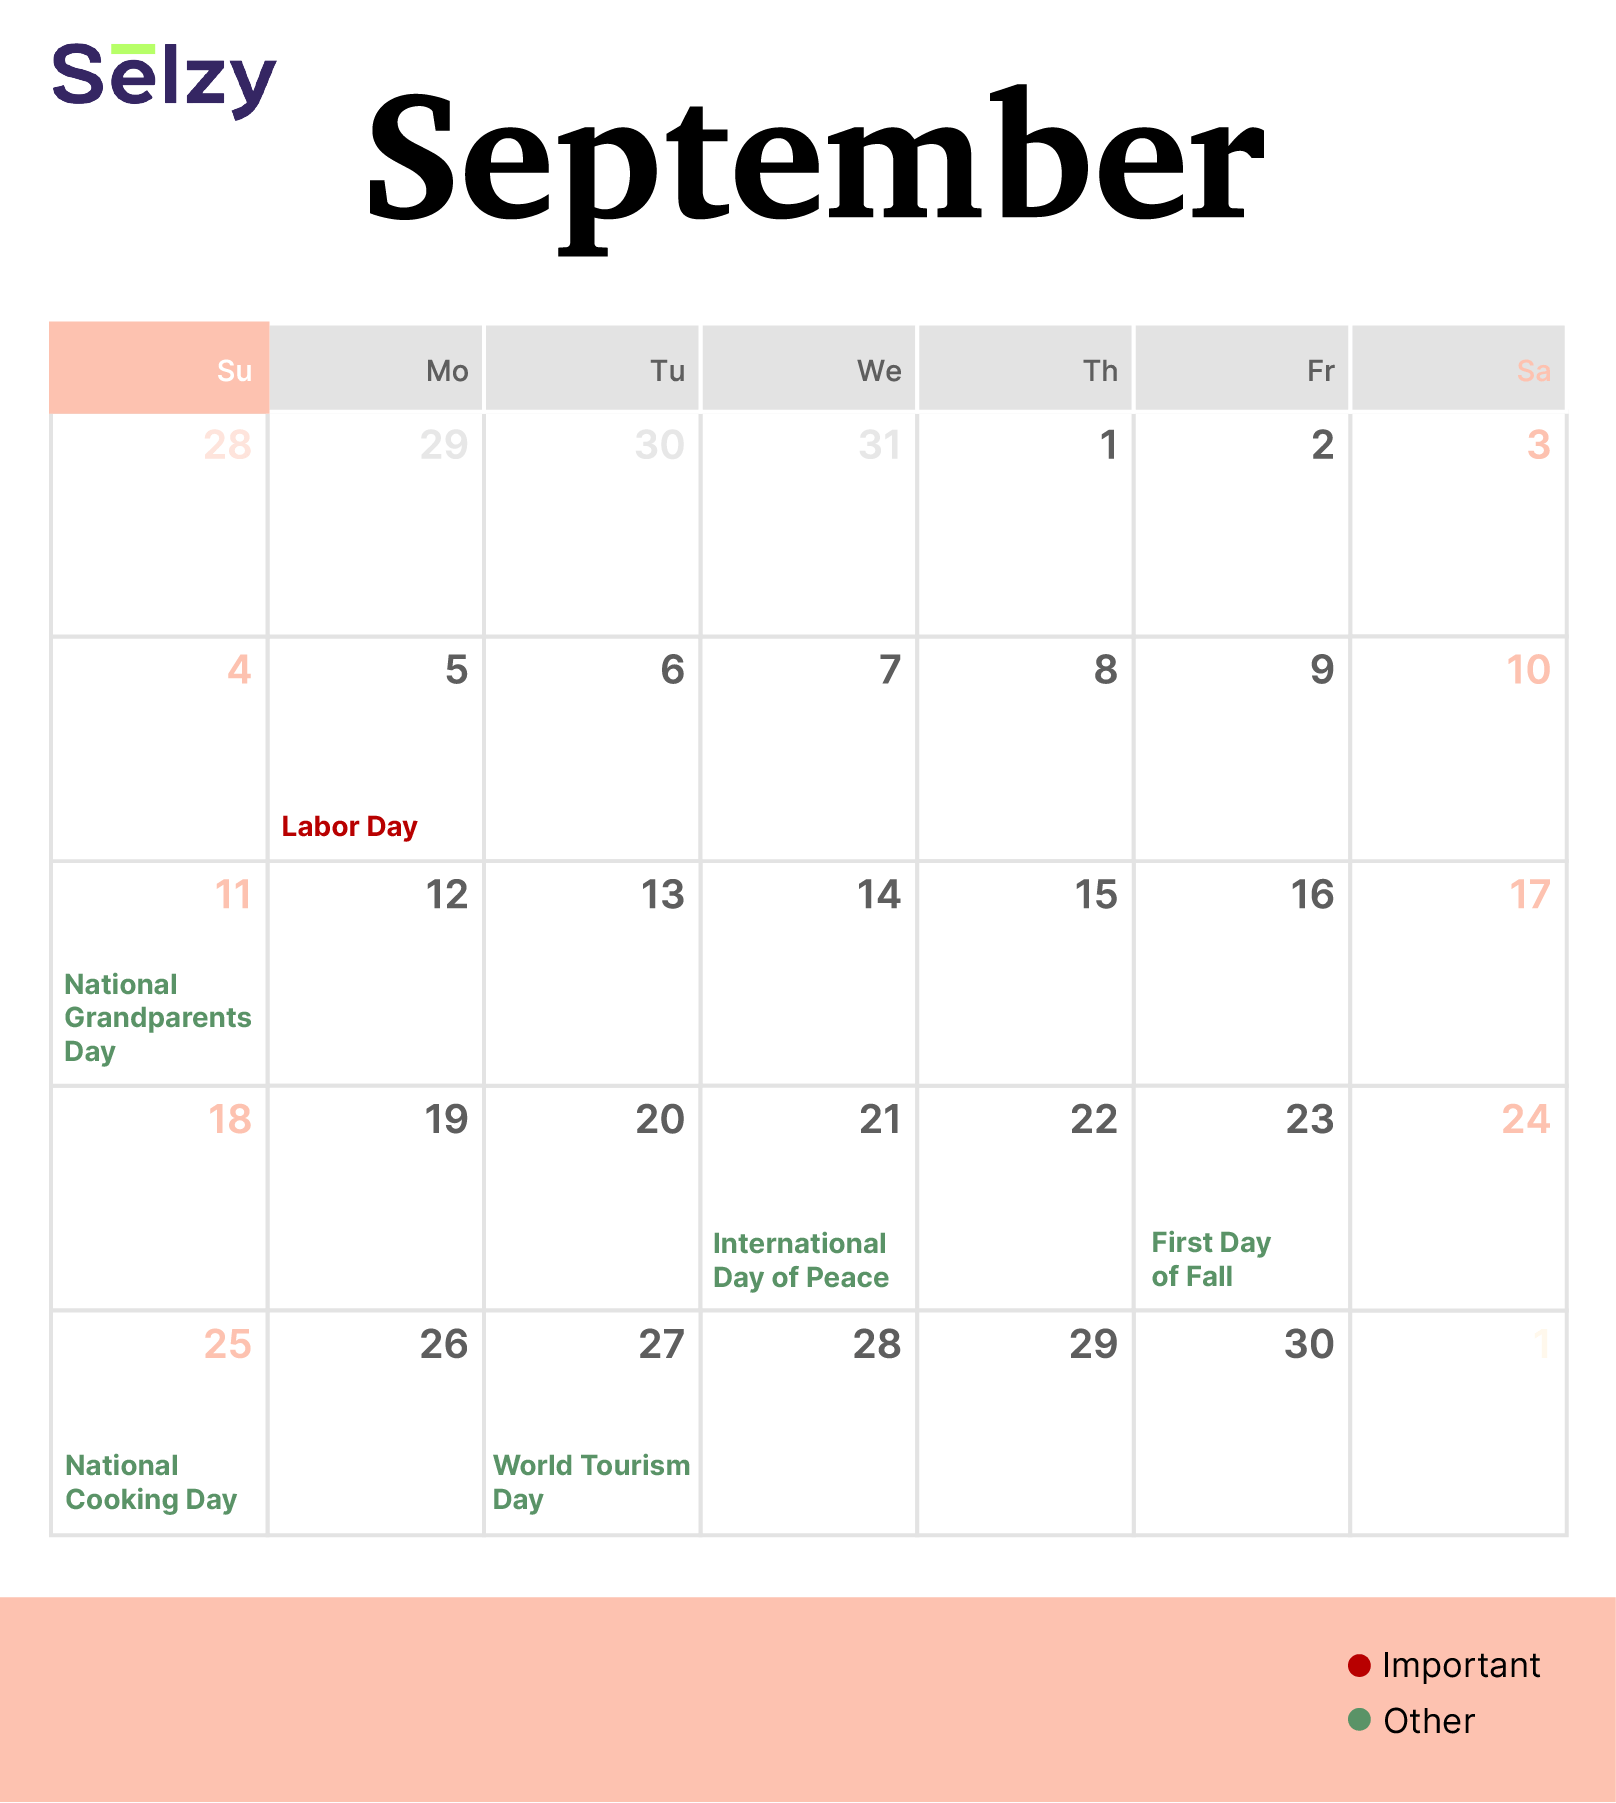 Holiday Marketing Calendar – September